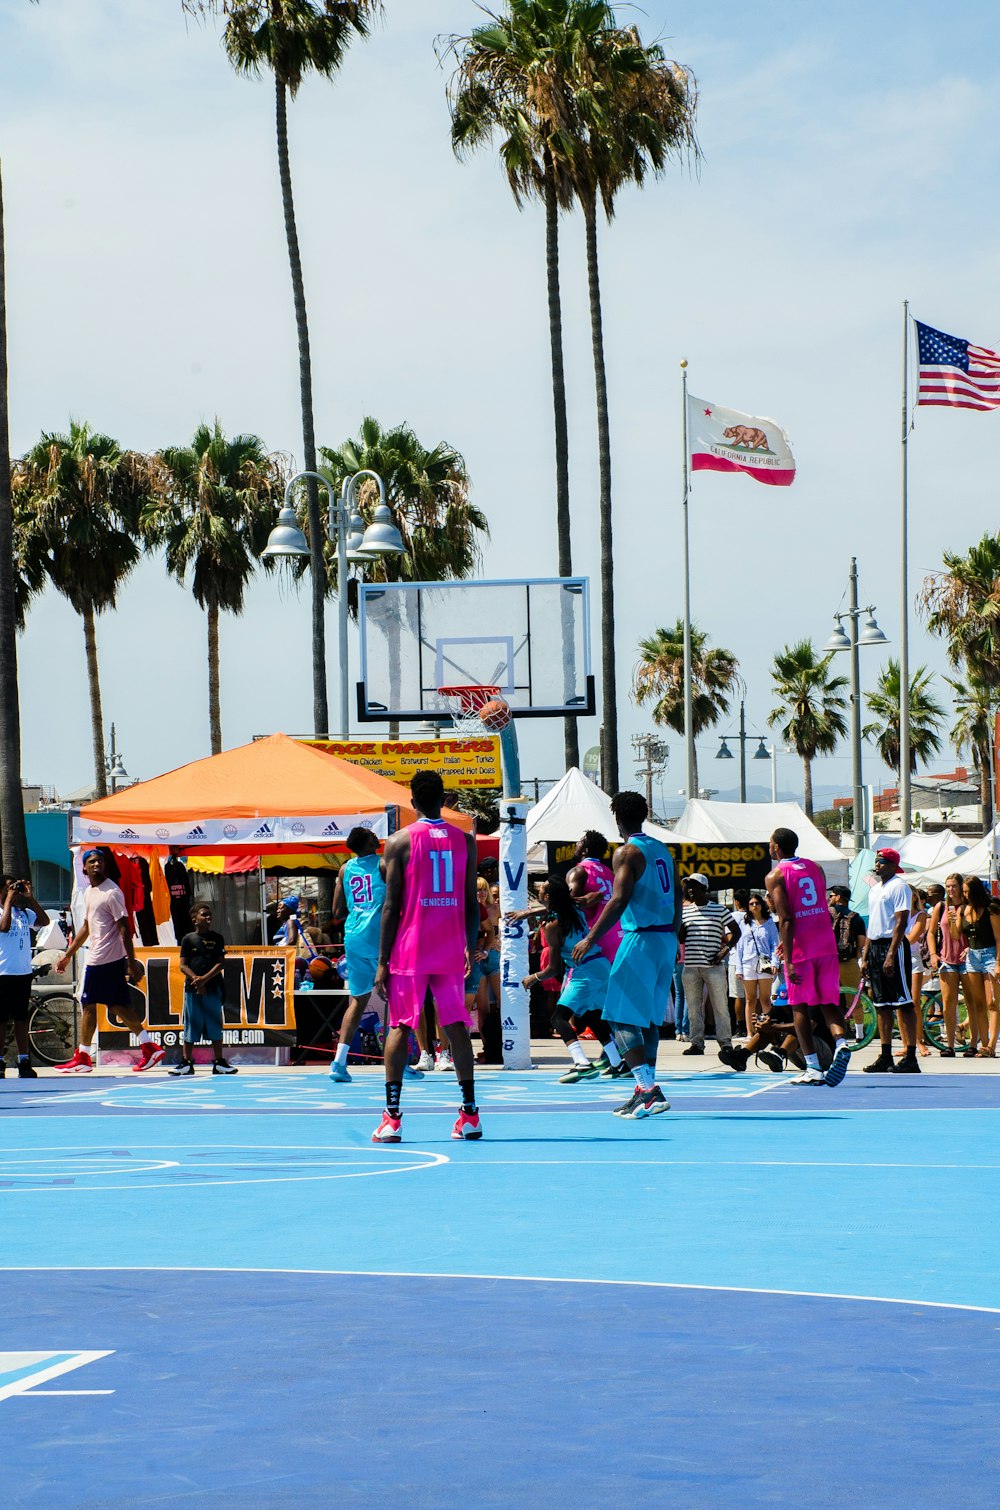 basketball players playing during daytime